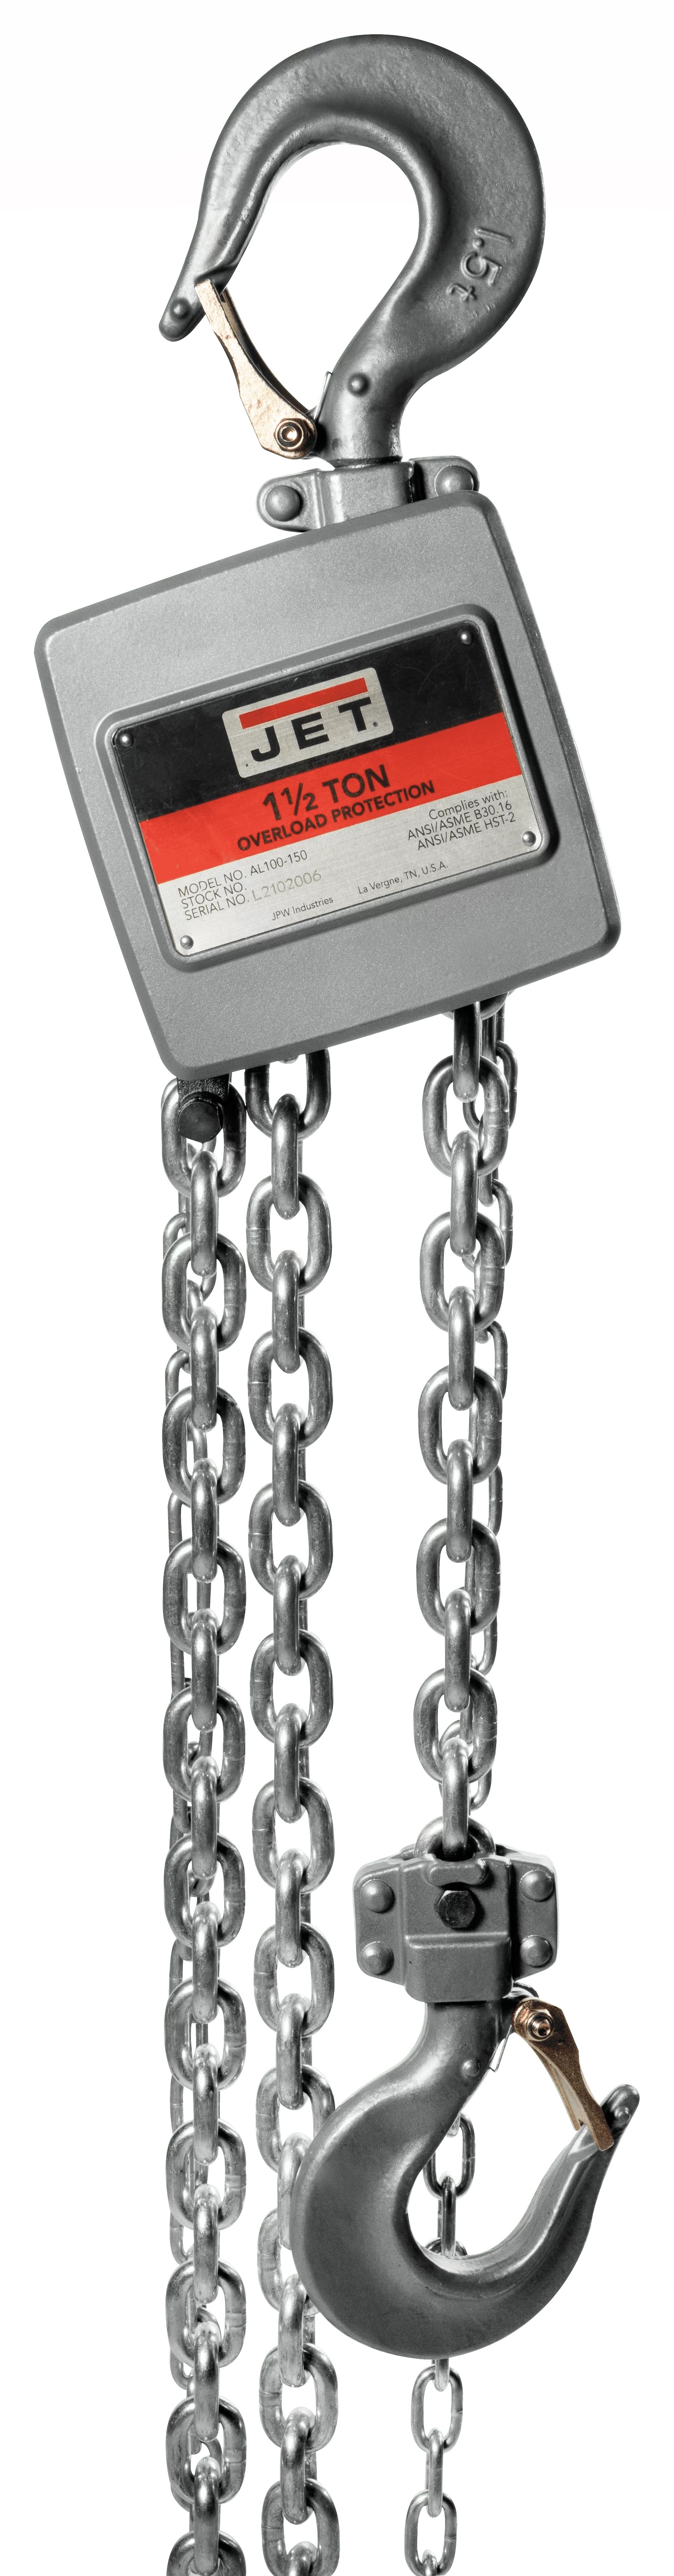 AL100-150-20 1-1/2 Ton Hand Chain Hoist with 20ft of Lift